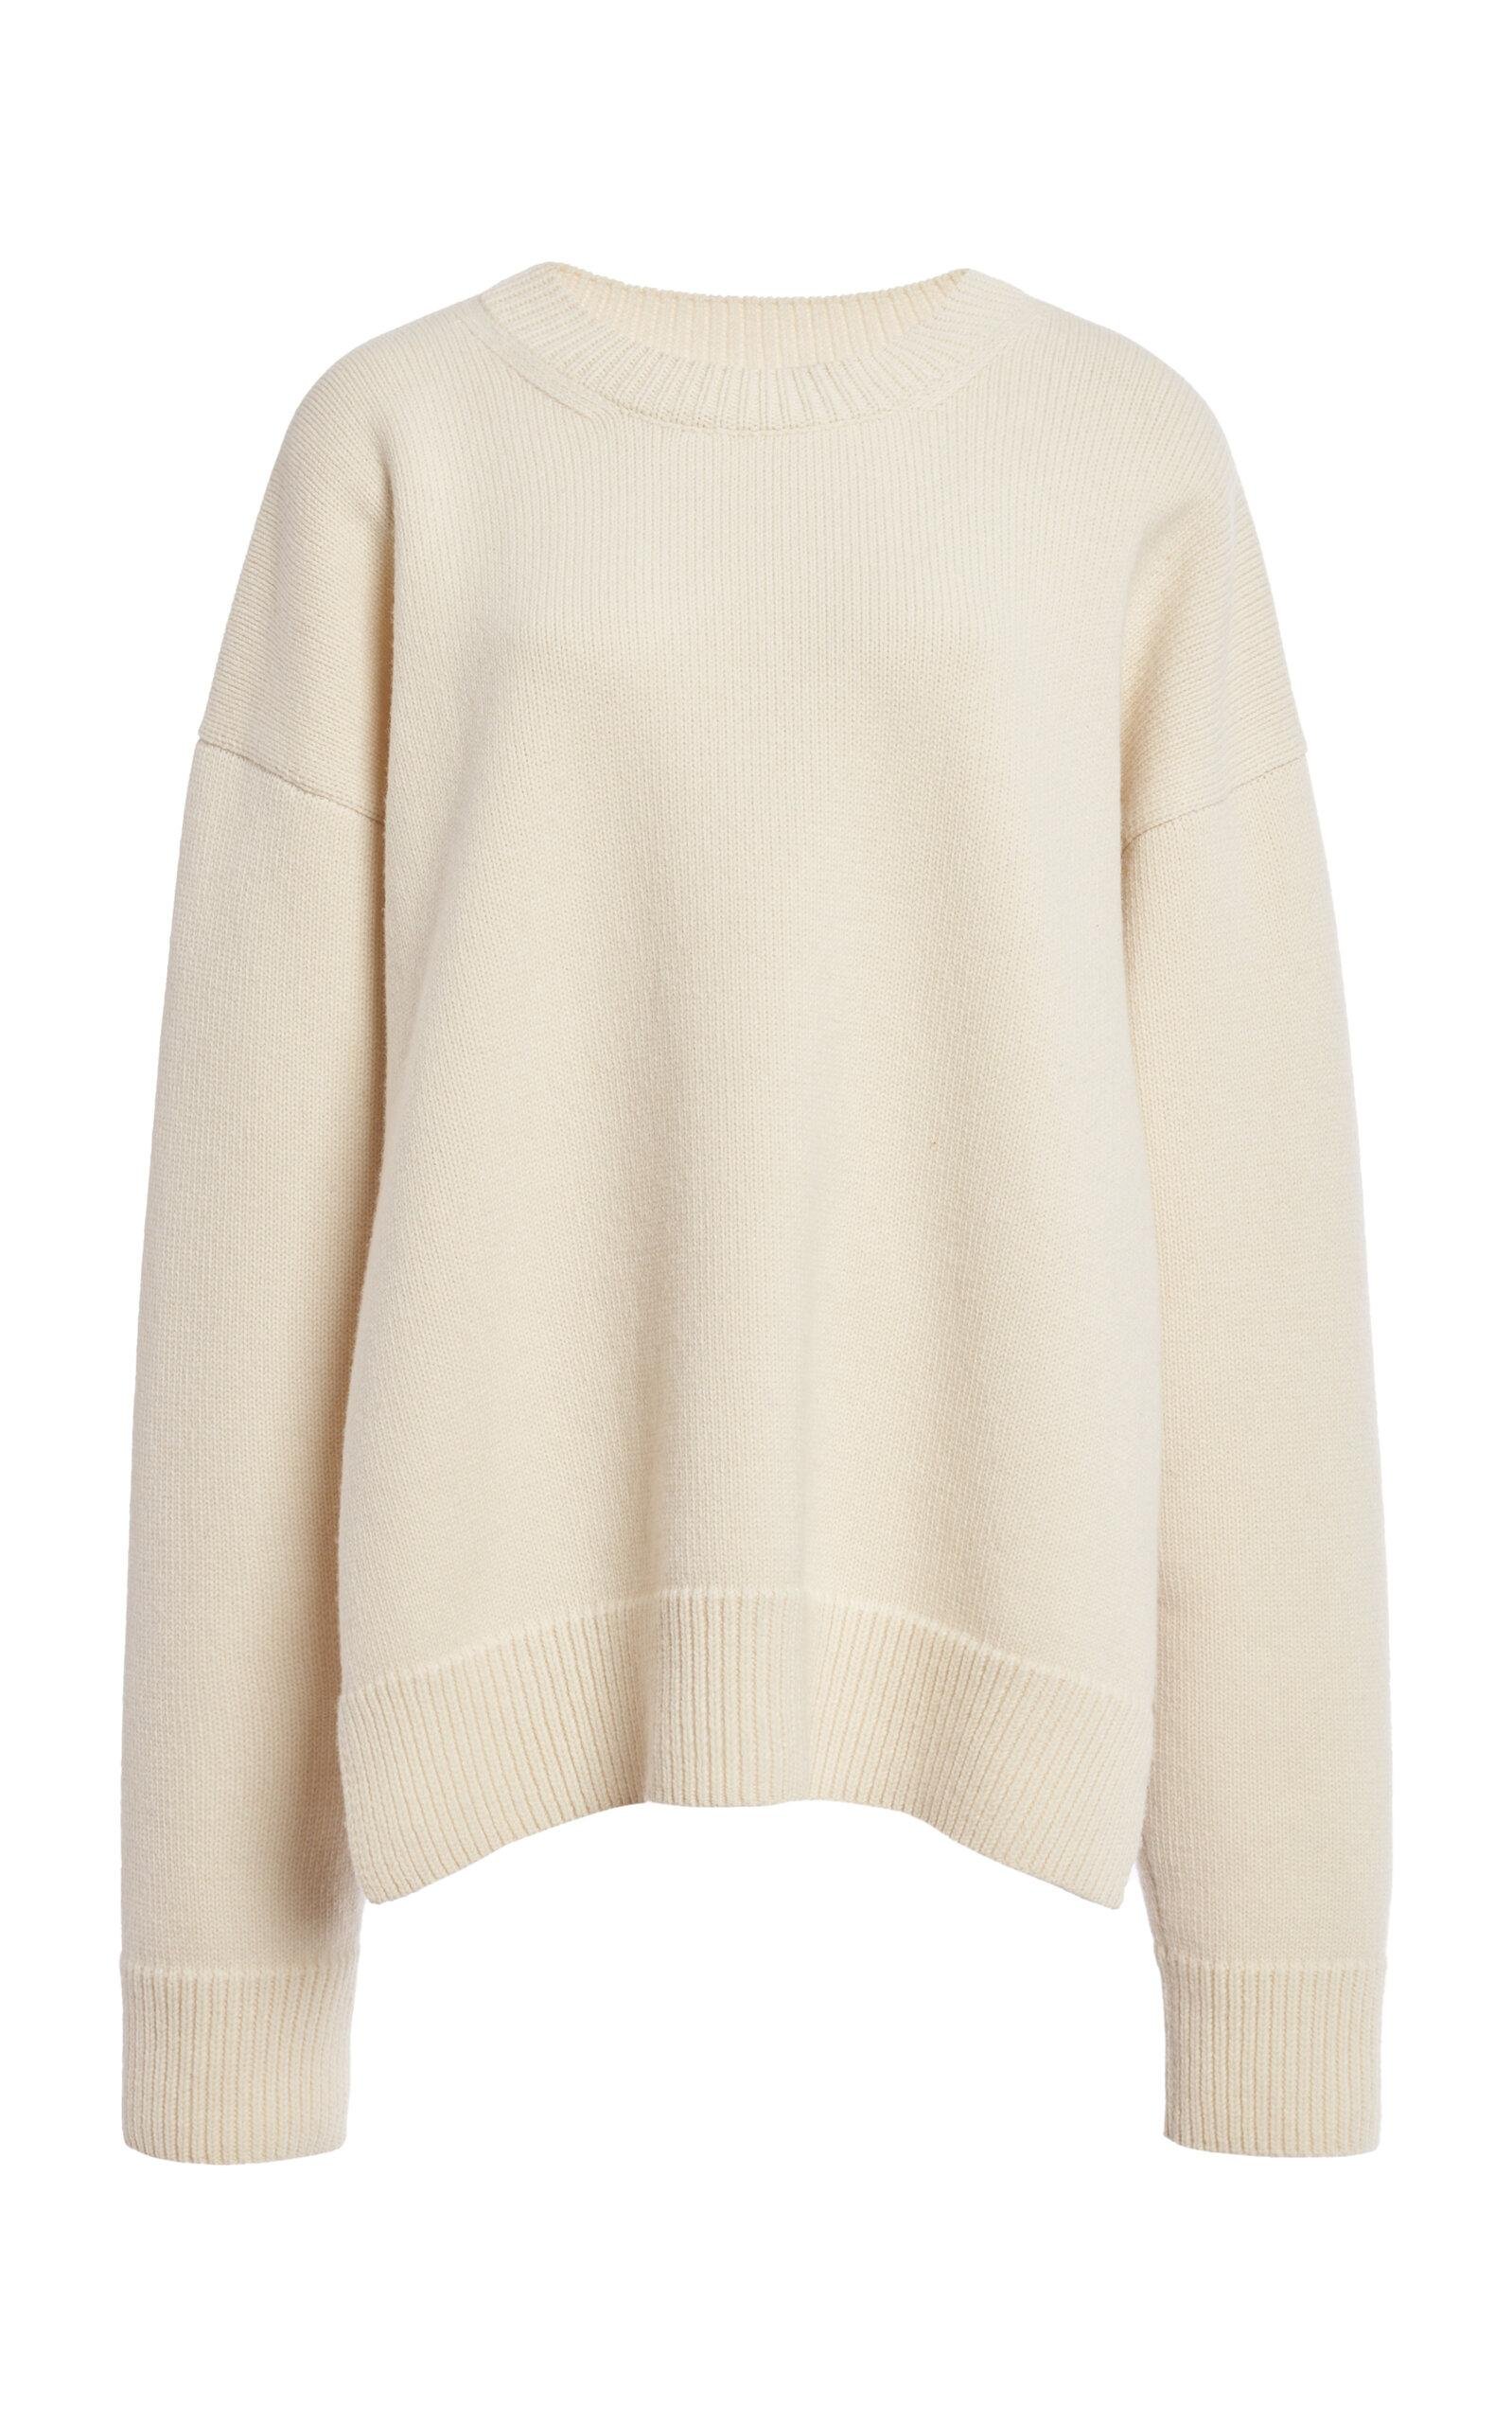 Jil Sander - Knit Wool-Cashmere Sweater - Ivory - EU 32 - Moda Operandi by JIL SANDER